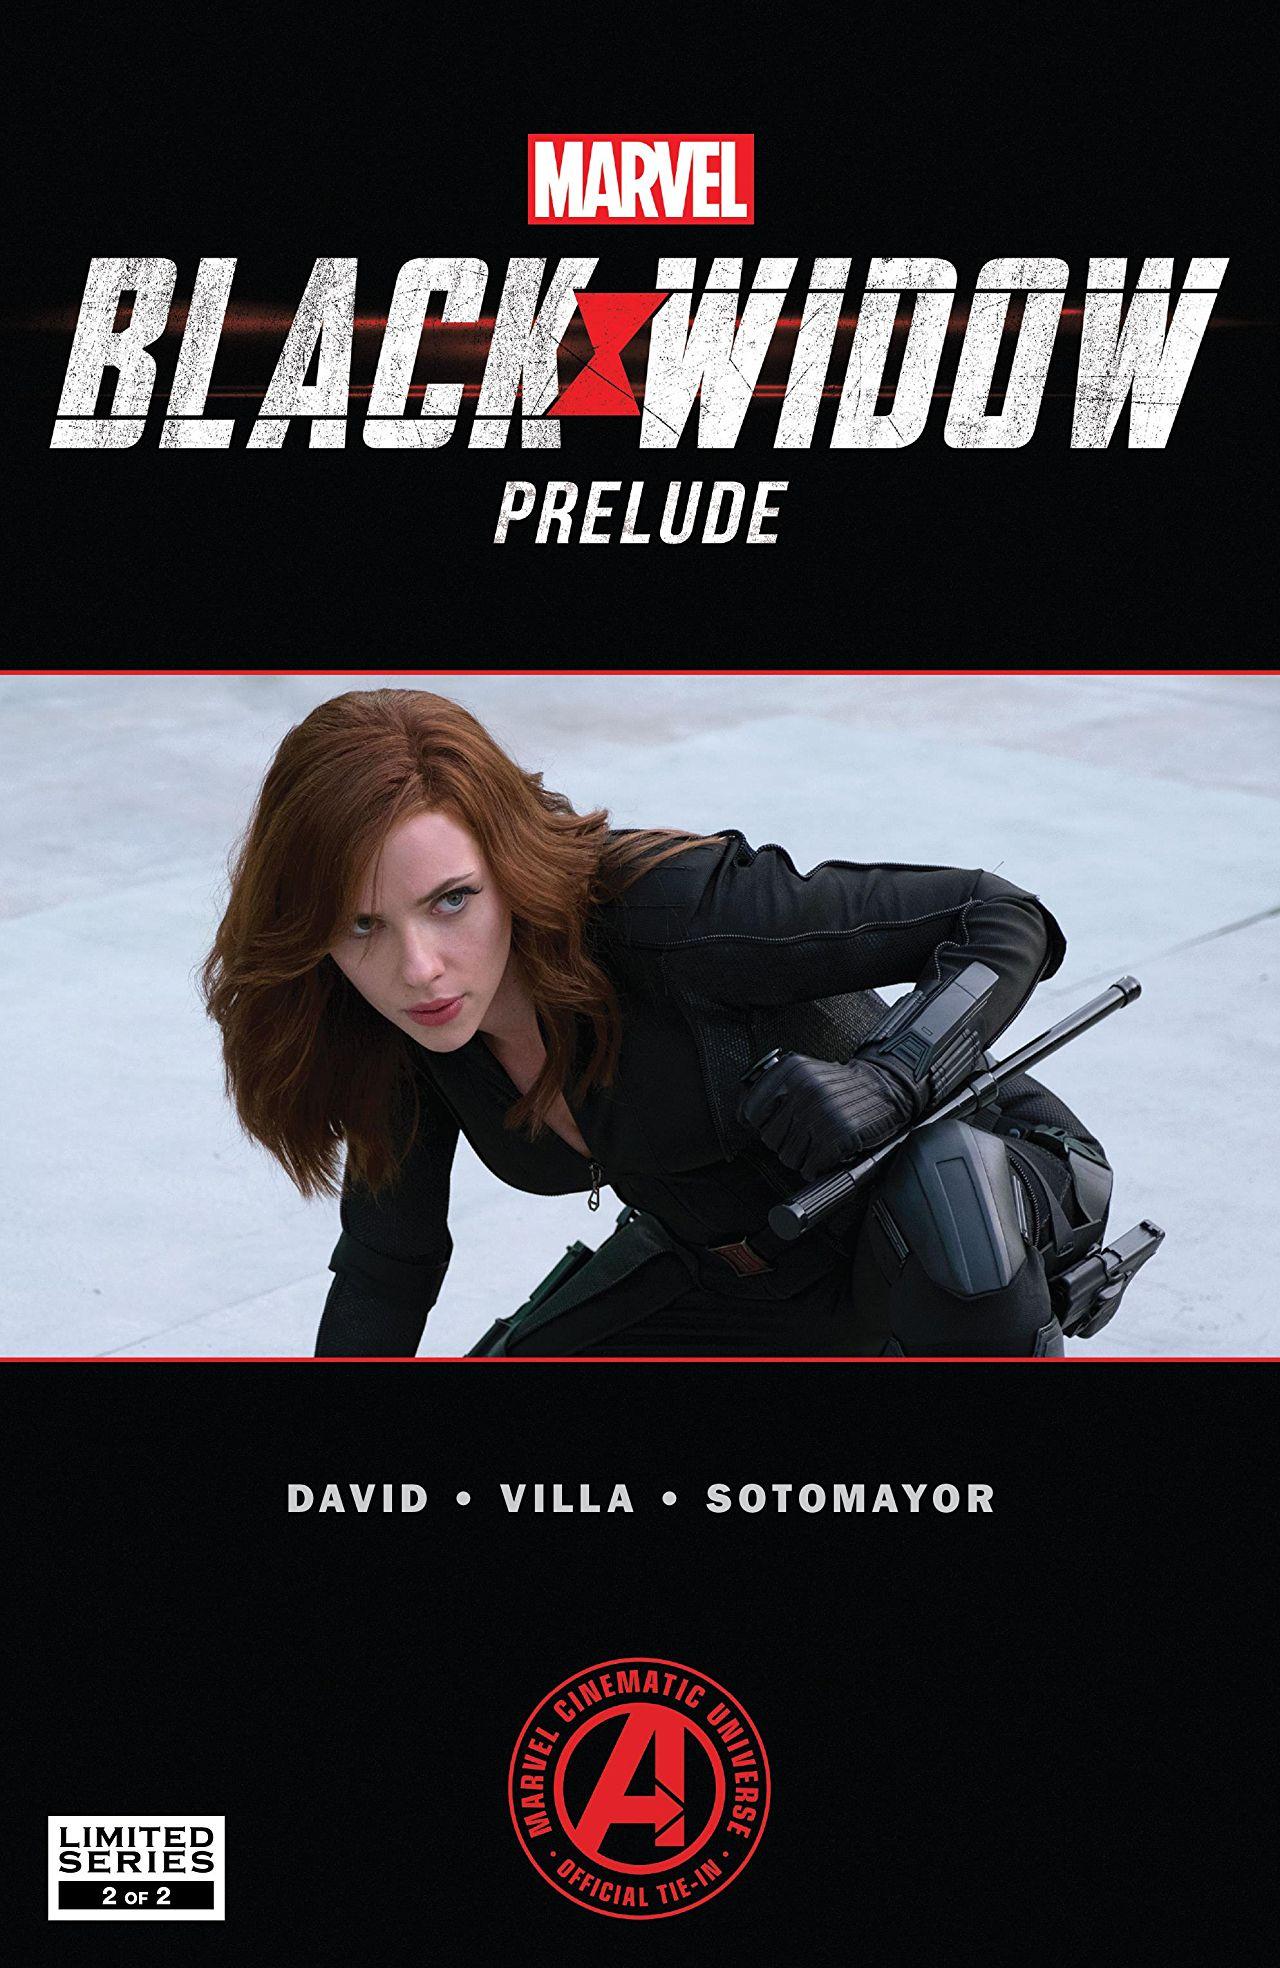 Marvel's Black Widow Prelude Vol. 1 #2